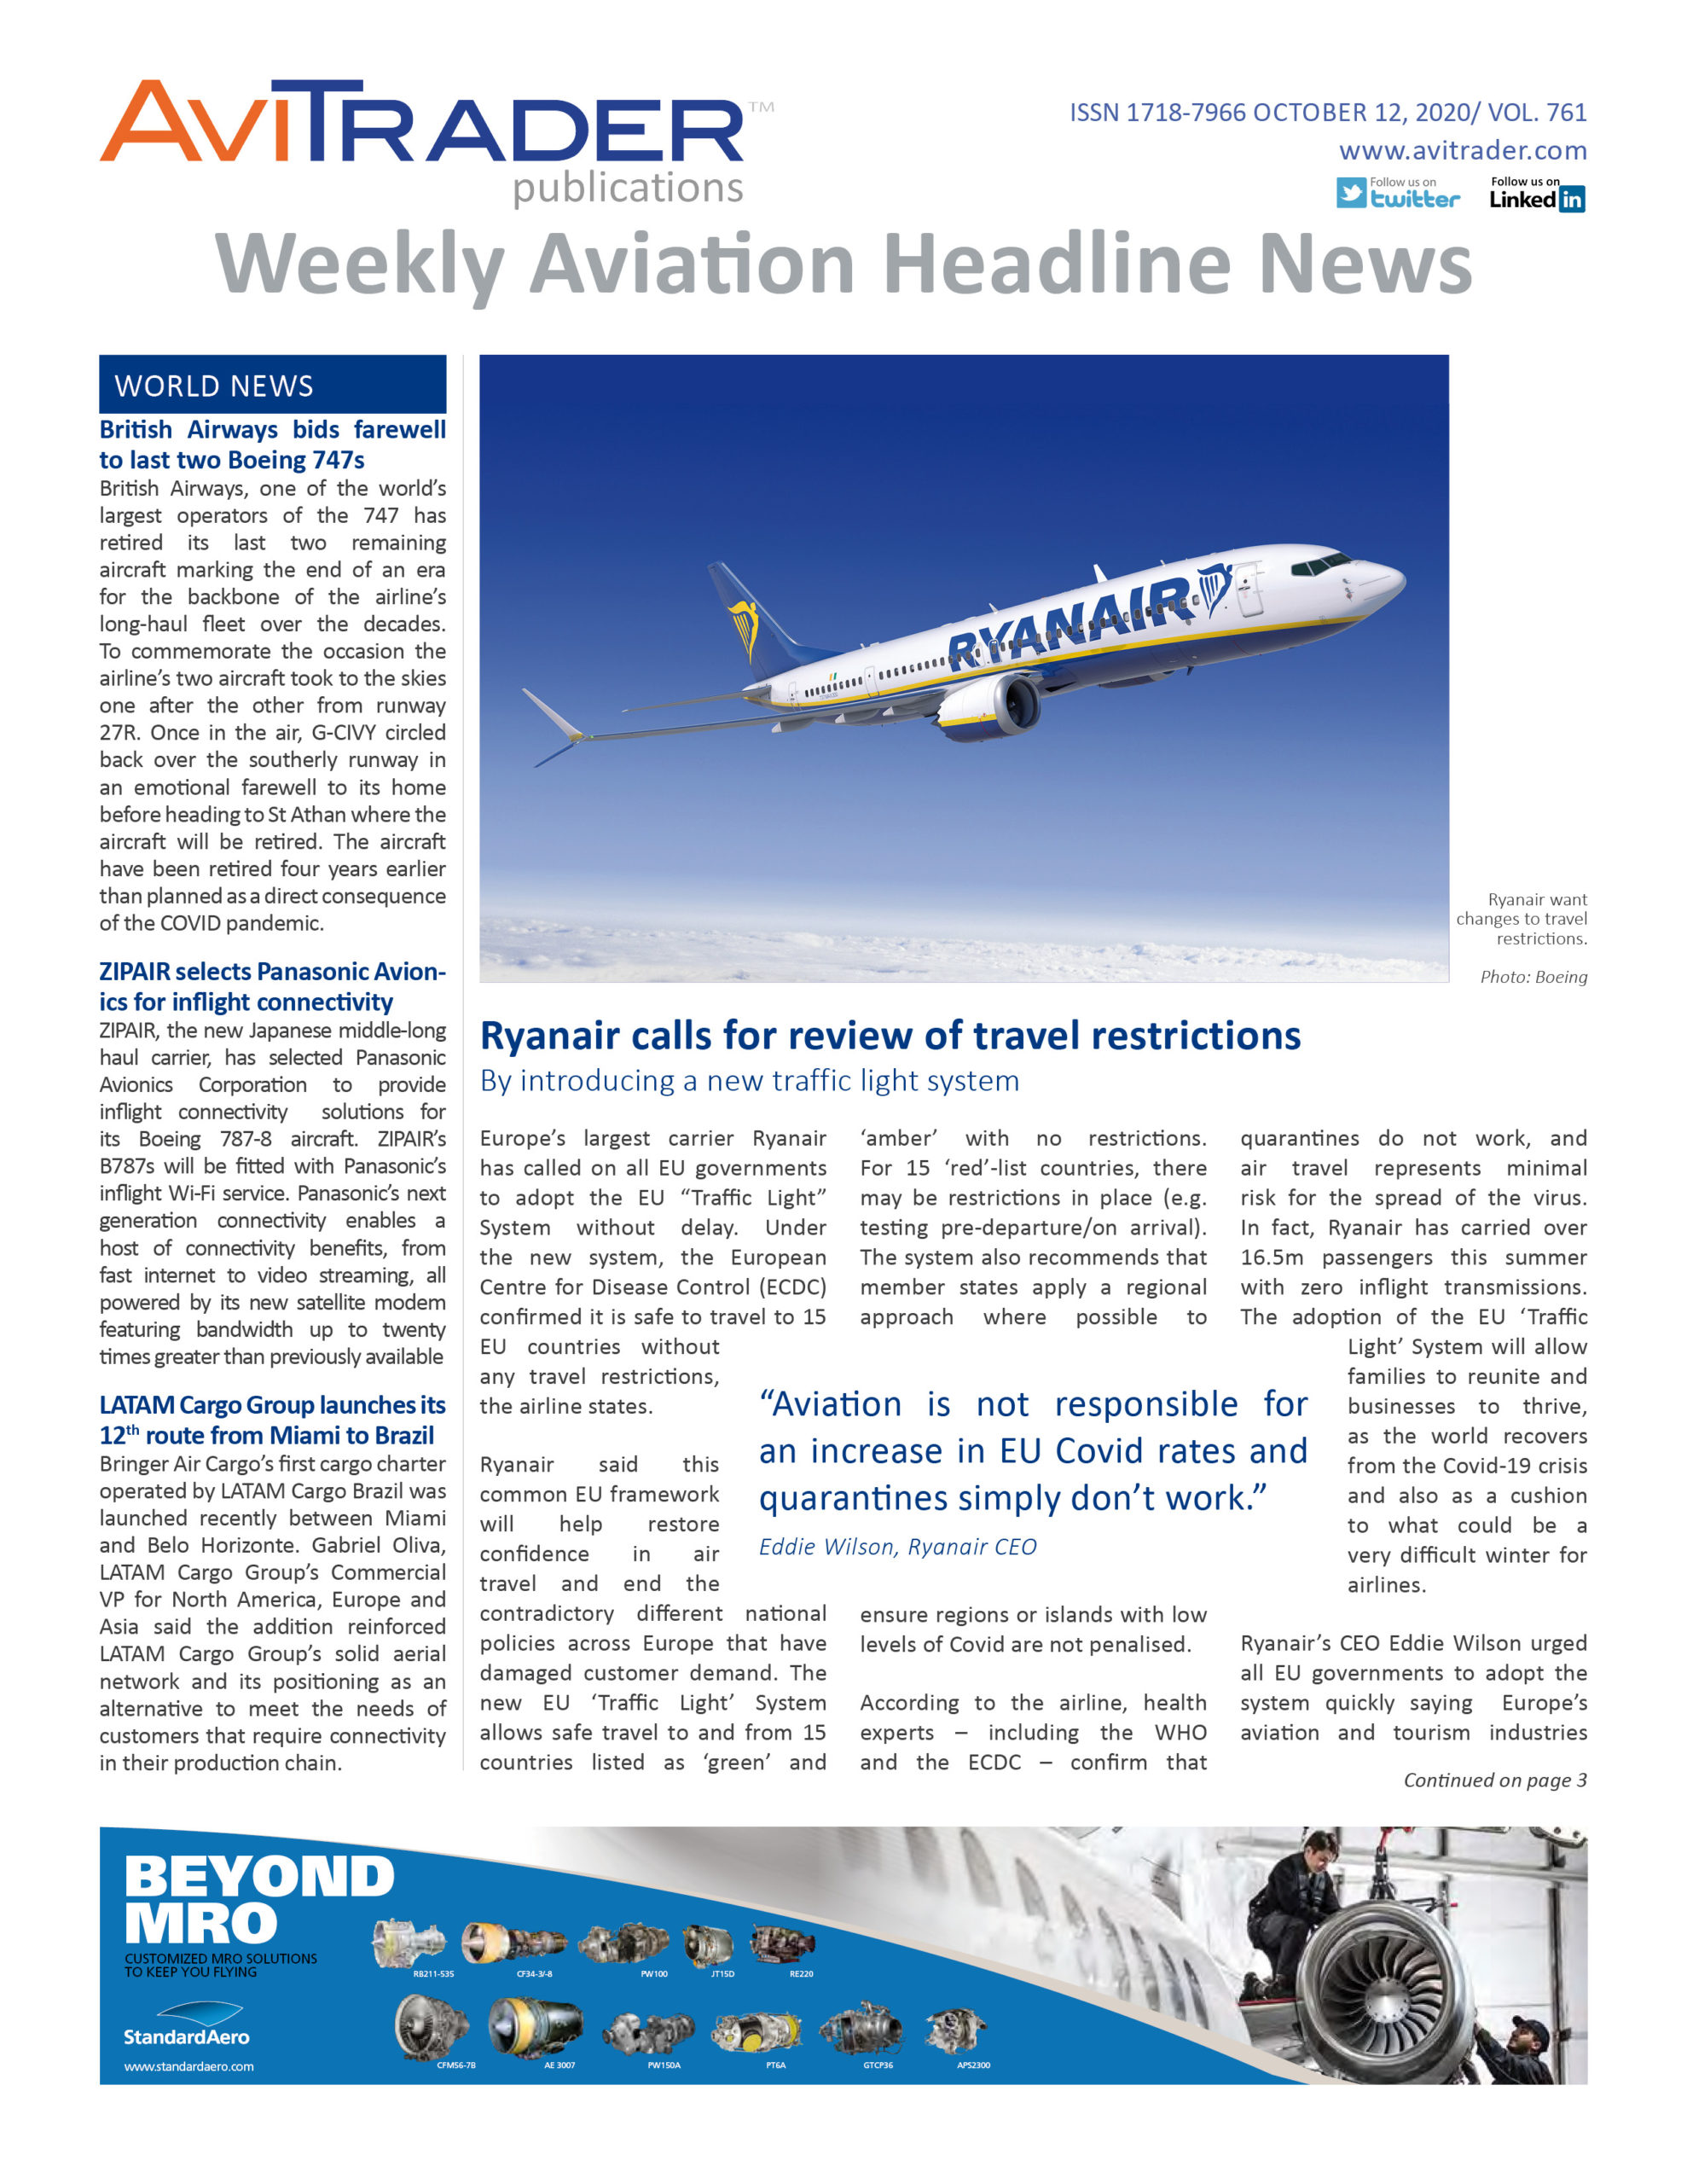 AviTrader_Weekly_Headline_News_Cover_2020-10-12